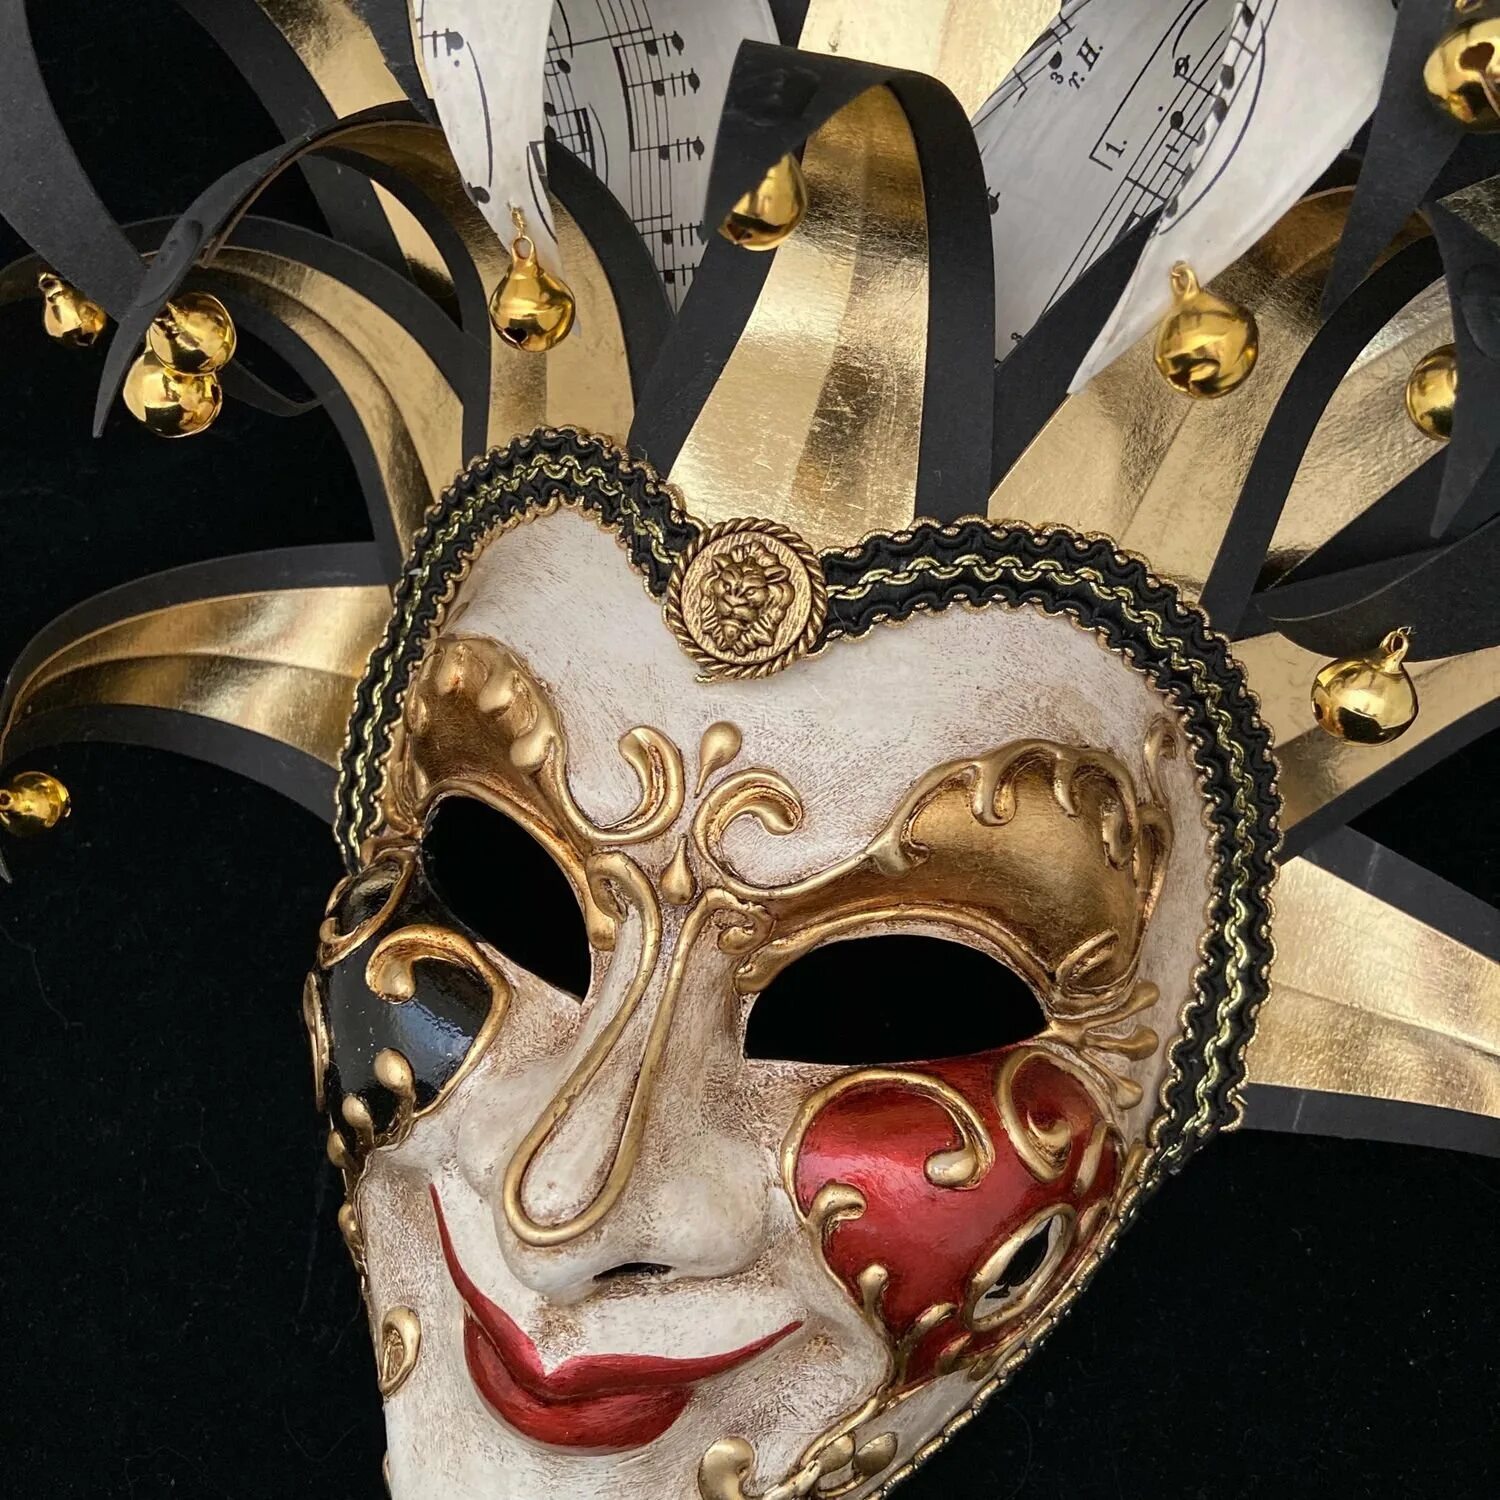 Картинка где маска. Венецианская маска Маттачино. Венецианская маска Вольтер. Маски венецианские карнавальные. Венеция маски - Маттачино.